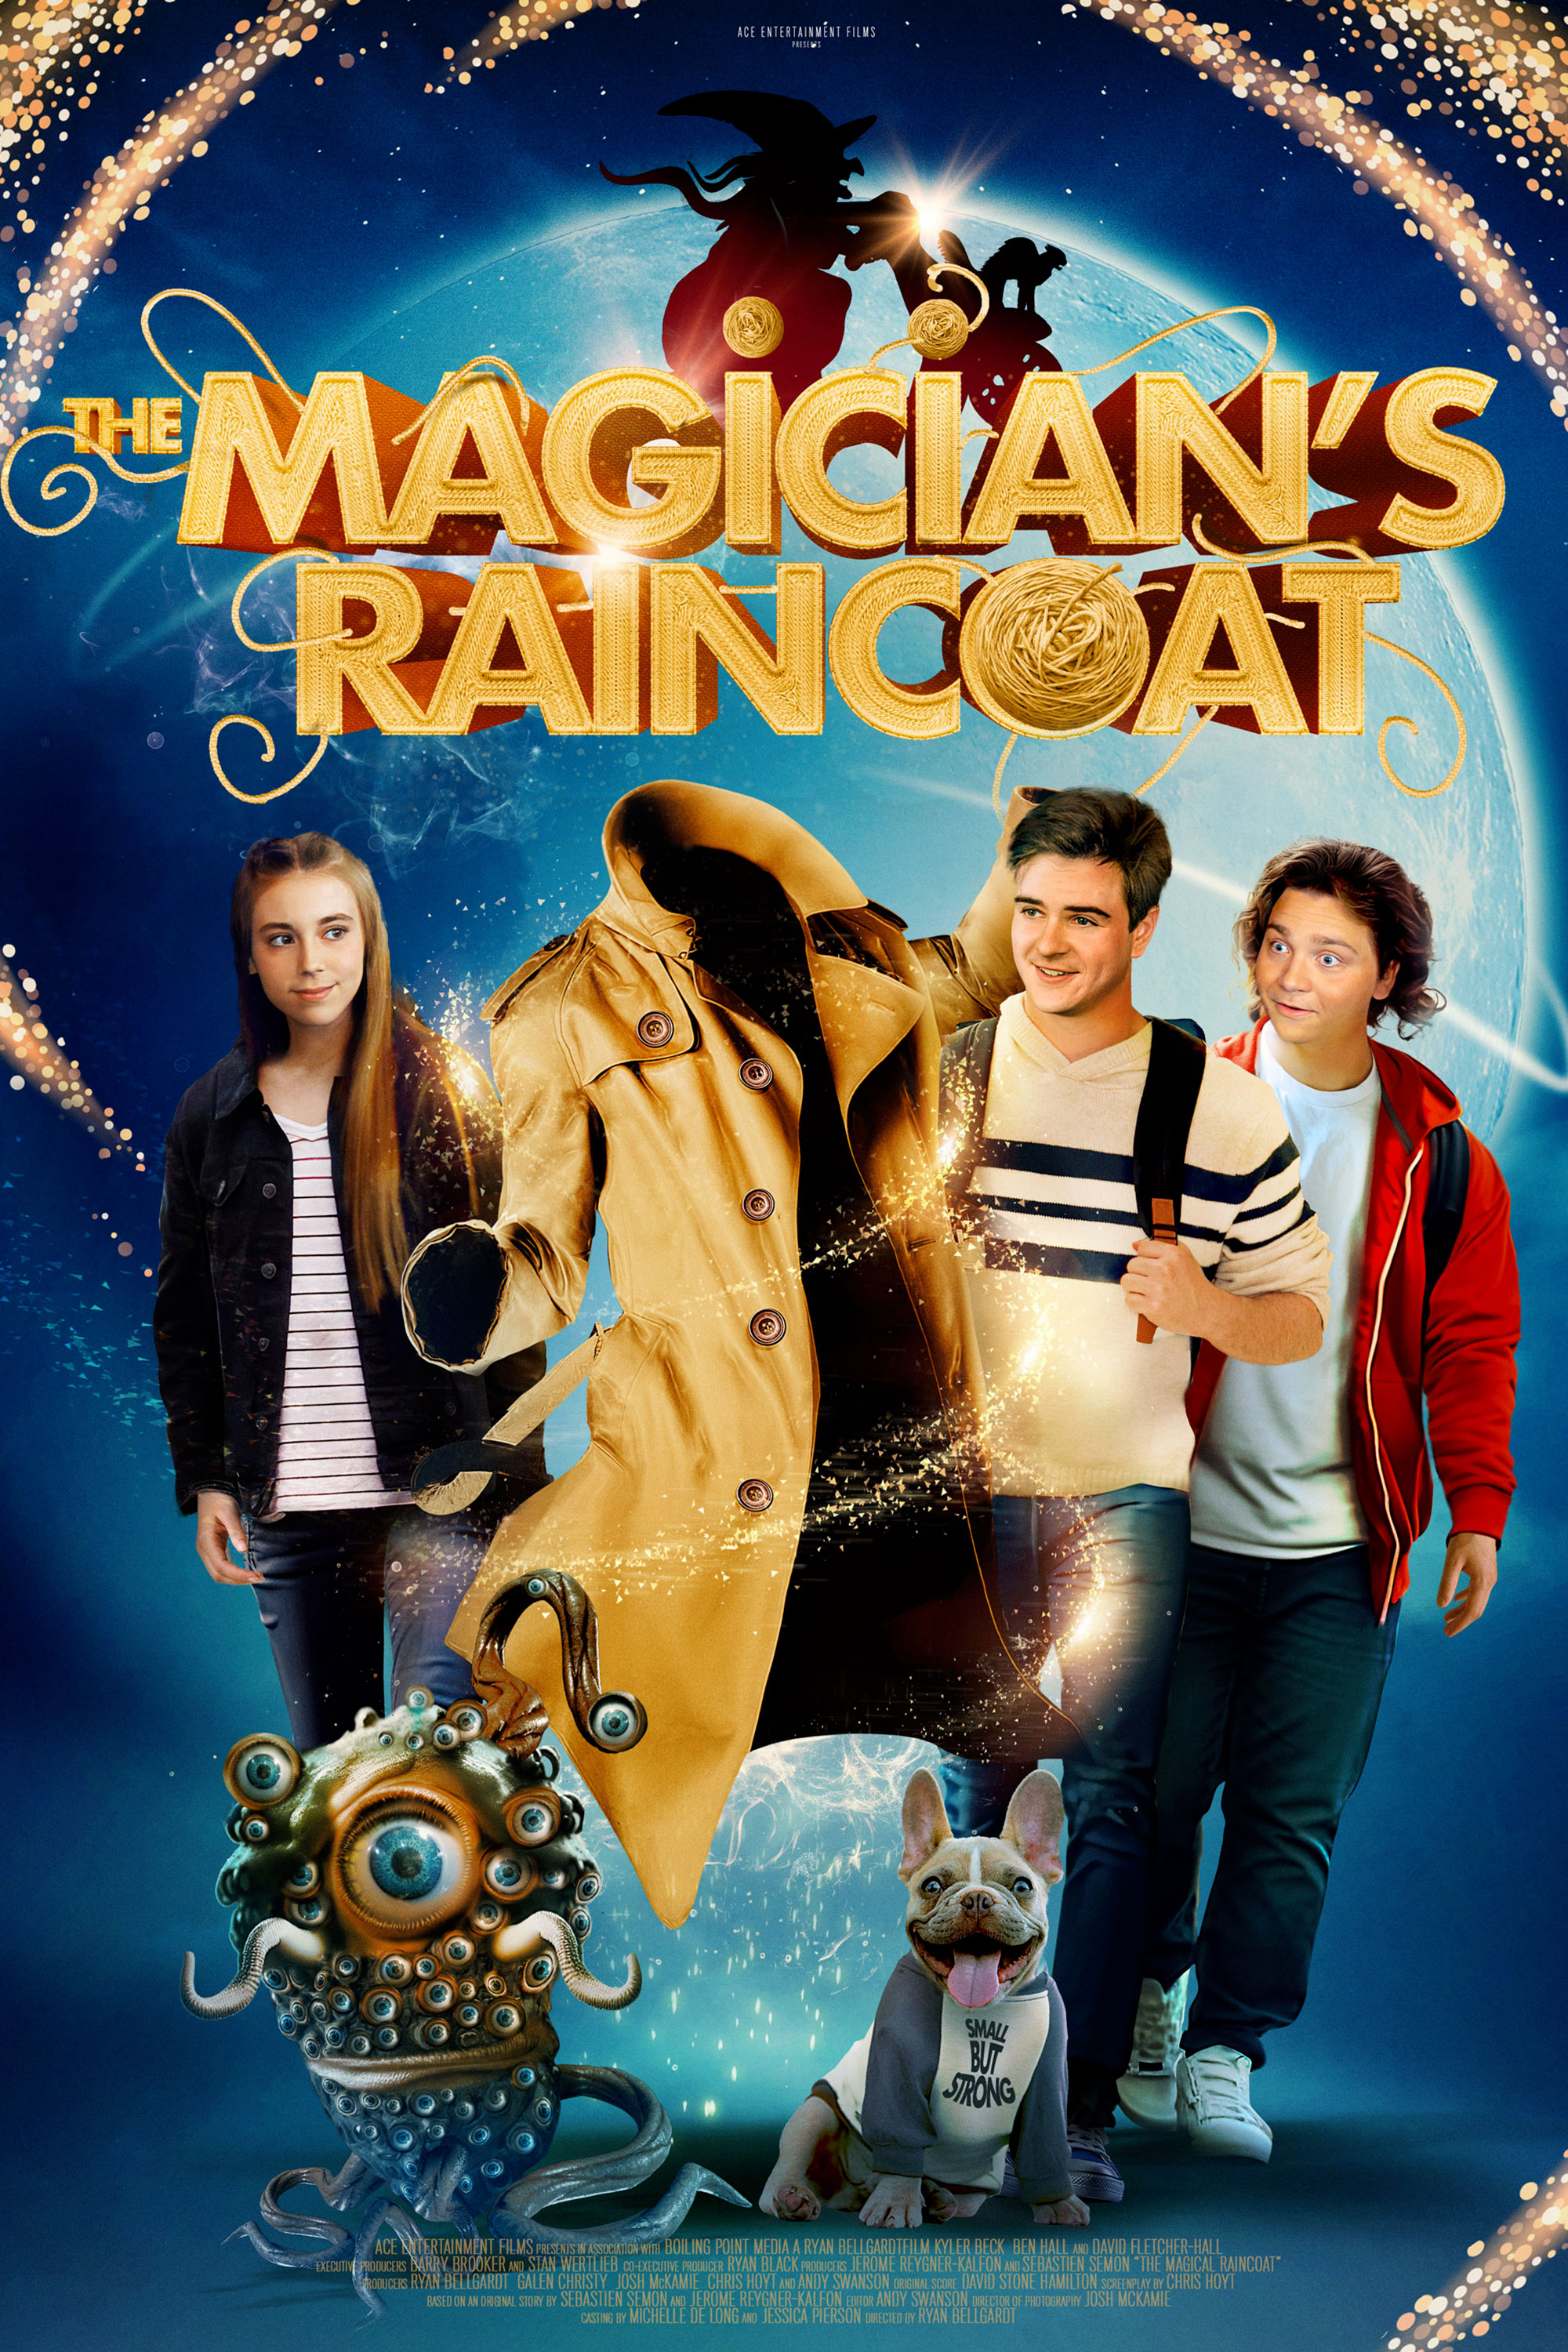 The Magician's Raincoat